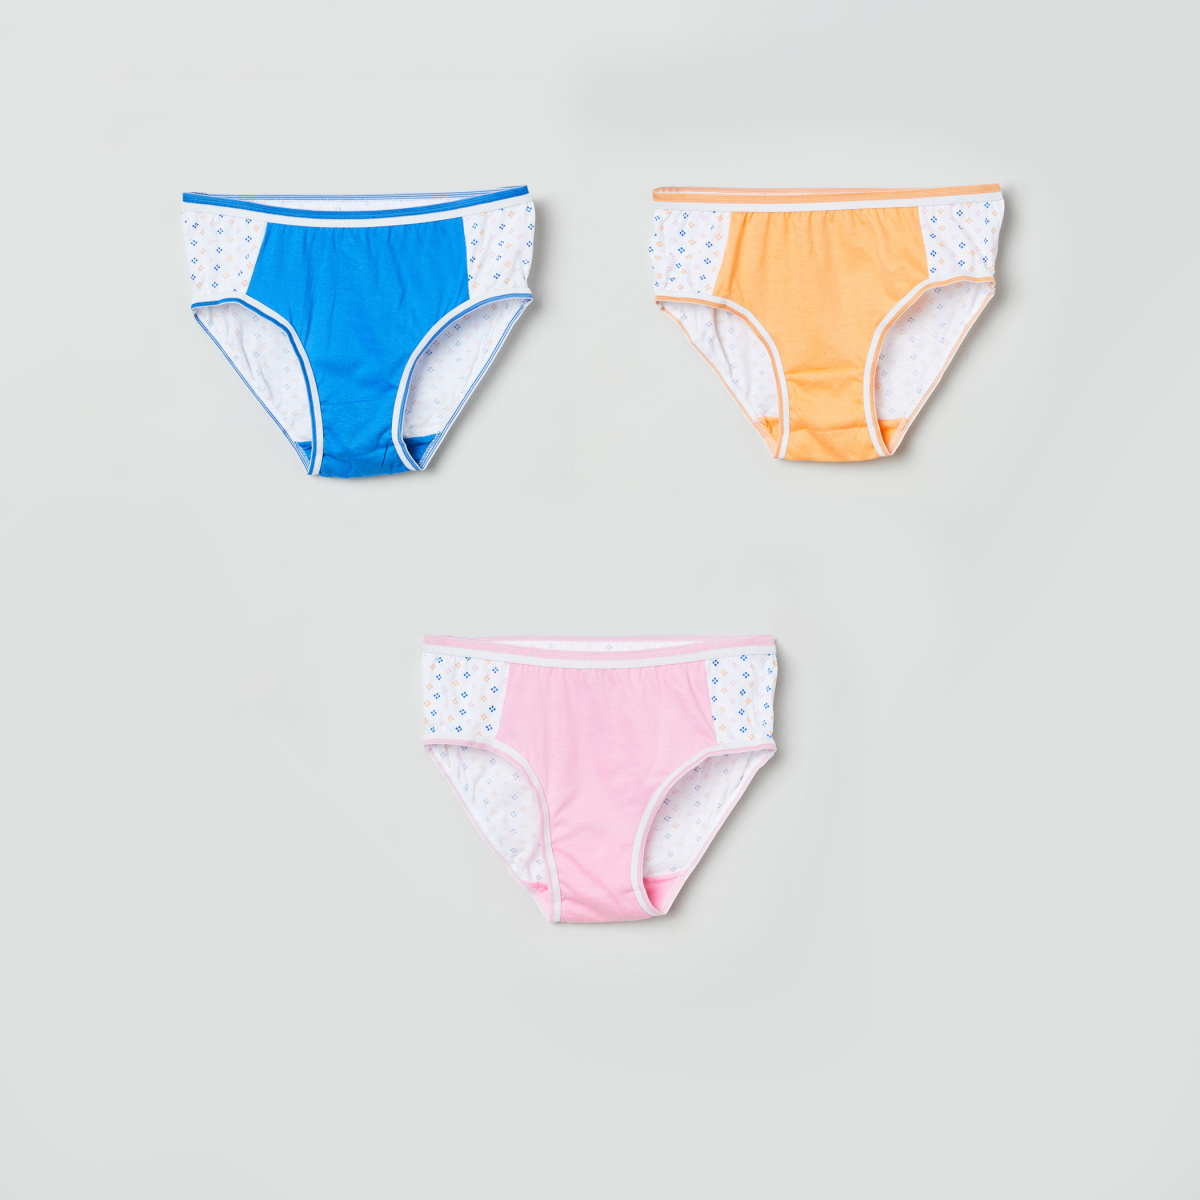 MAX Printed Colourblock Panties - Pack of 3 Pcs.